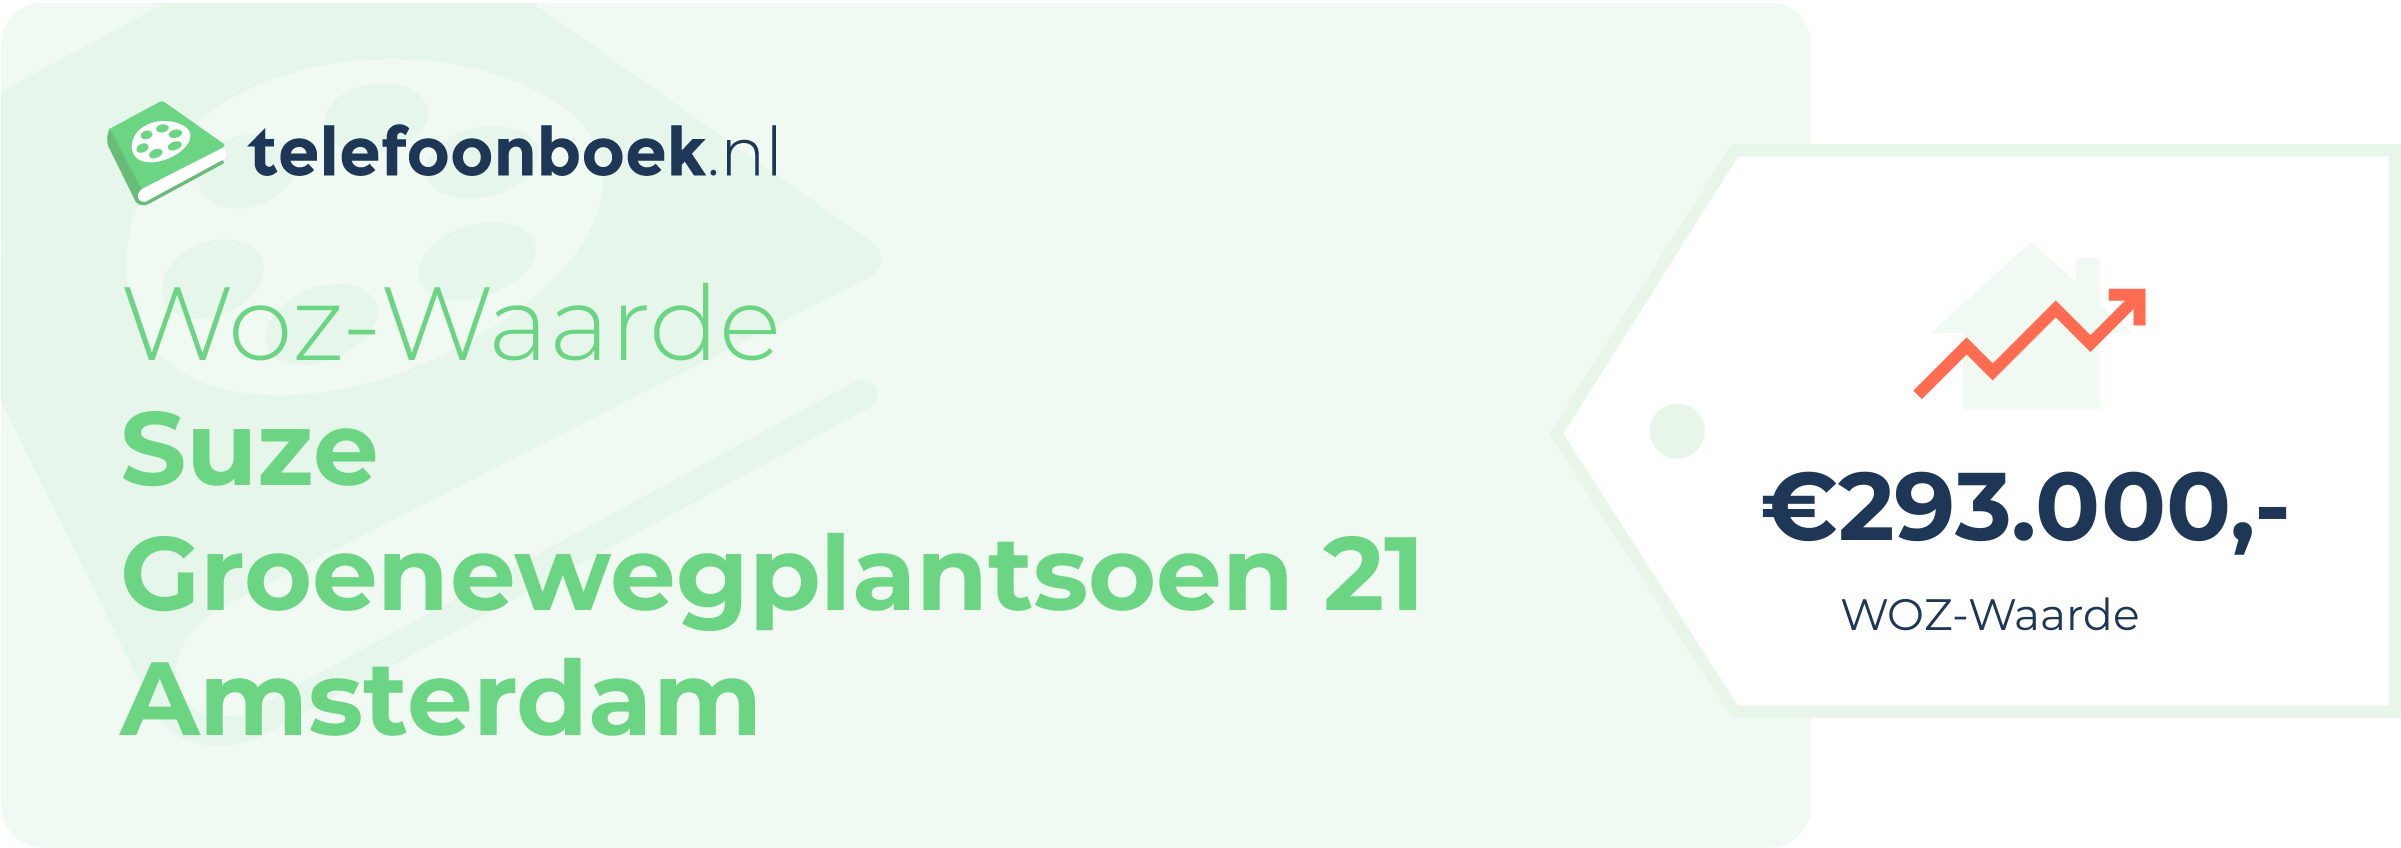 WOZ-waarde Suze Groenewegplantsoen 21 Amsterdam